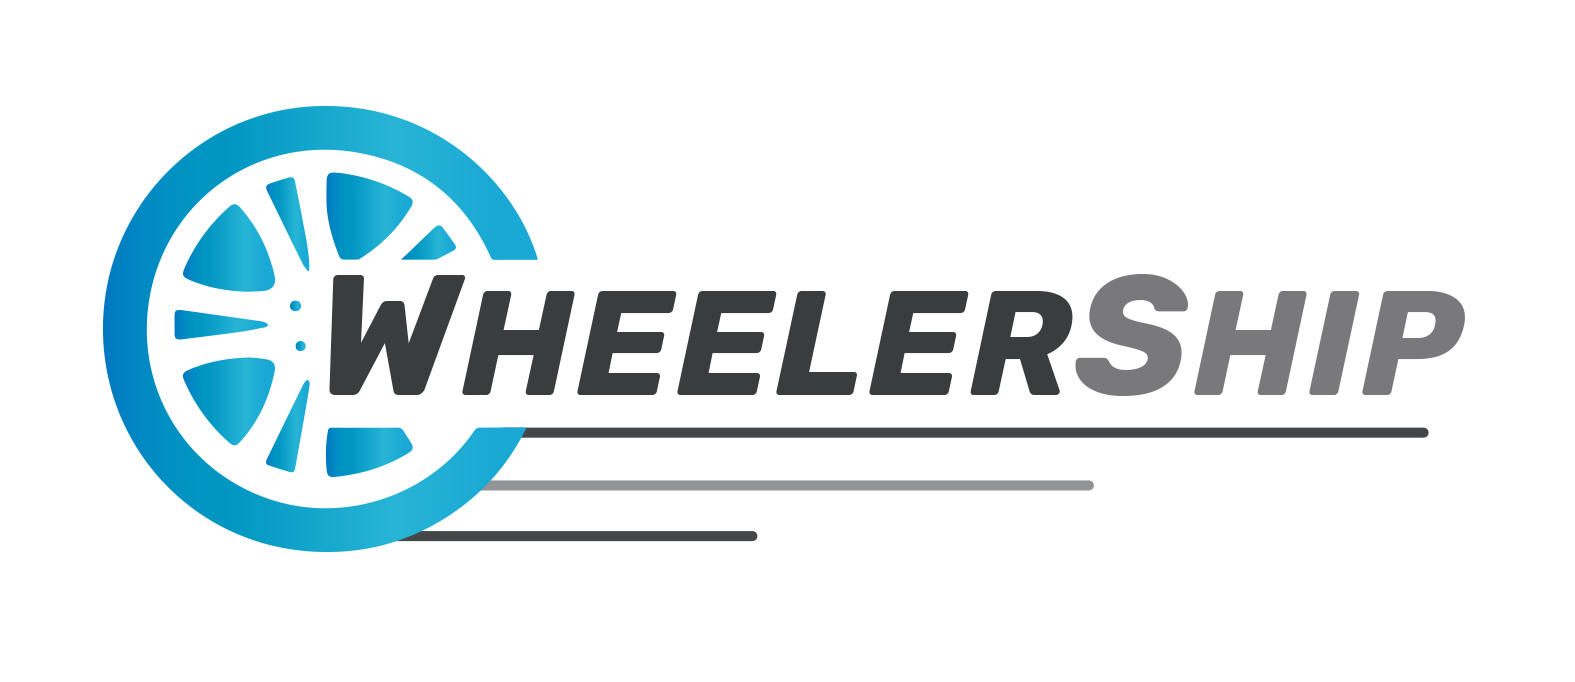 Wheelership Logo transparent.png